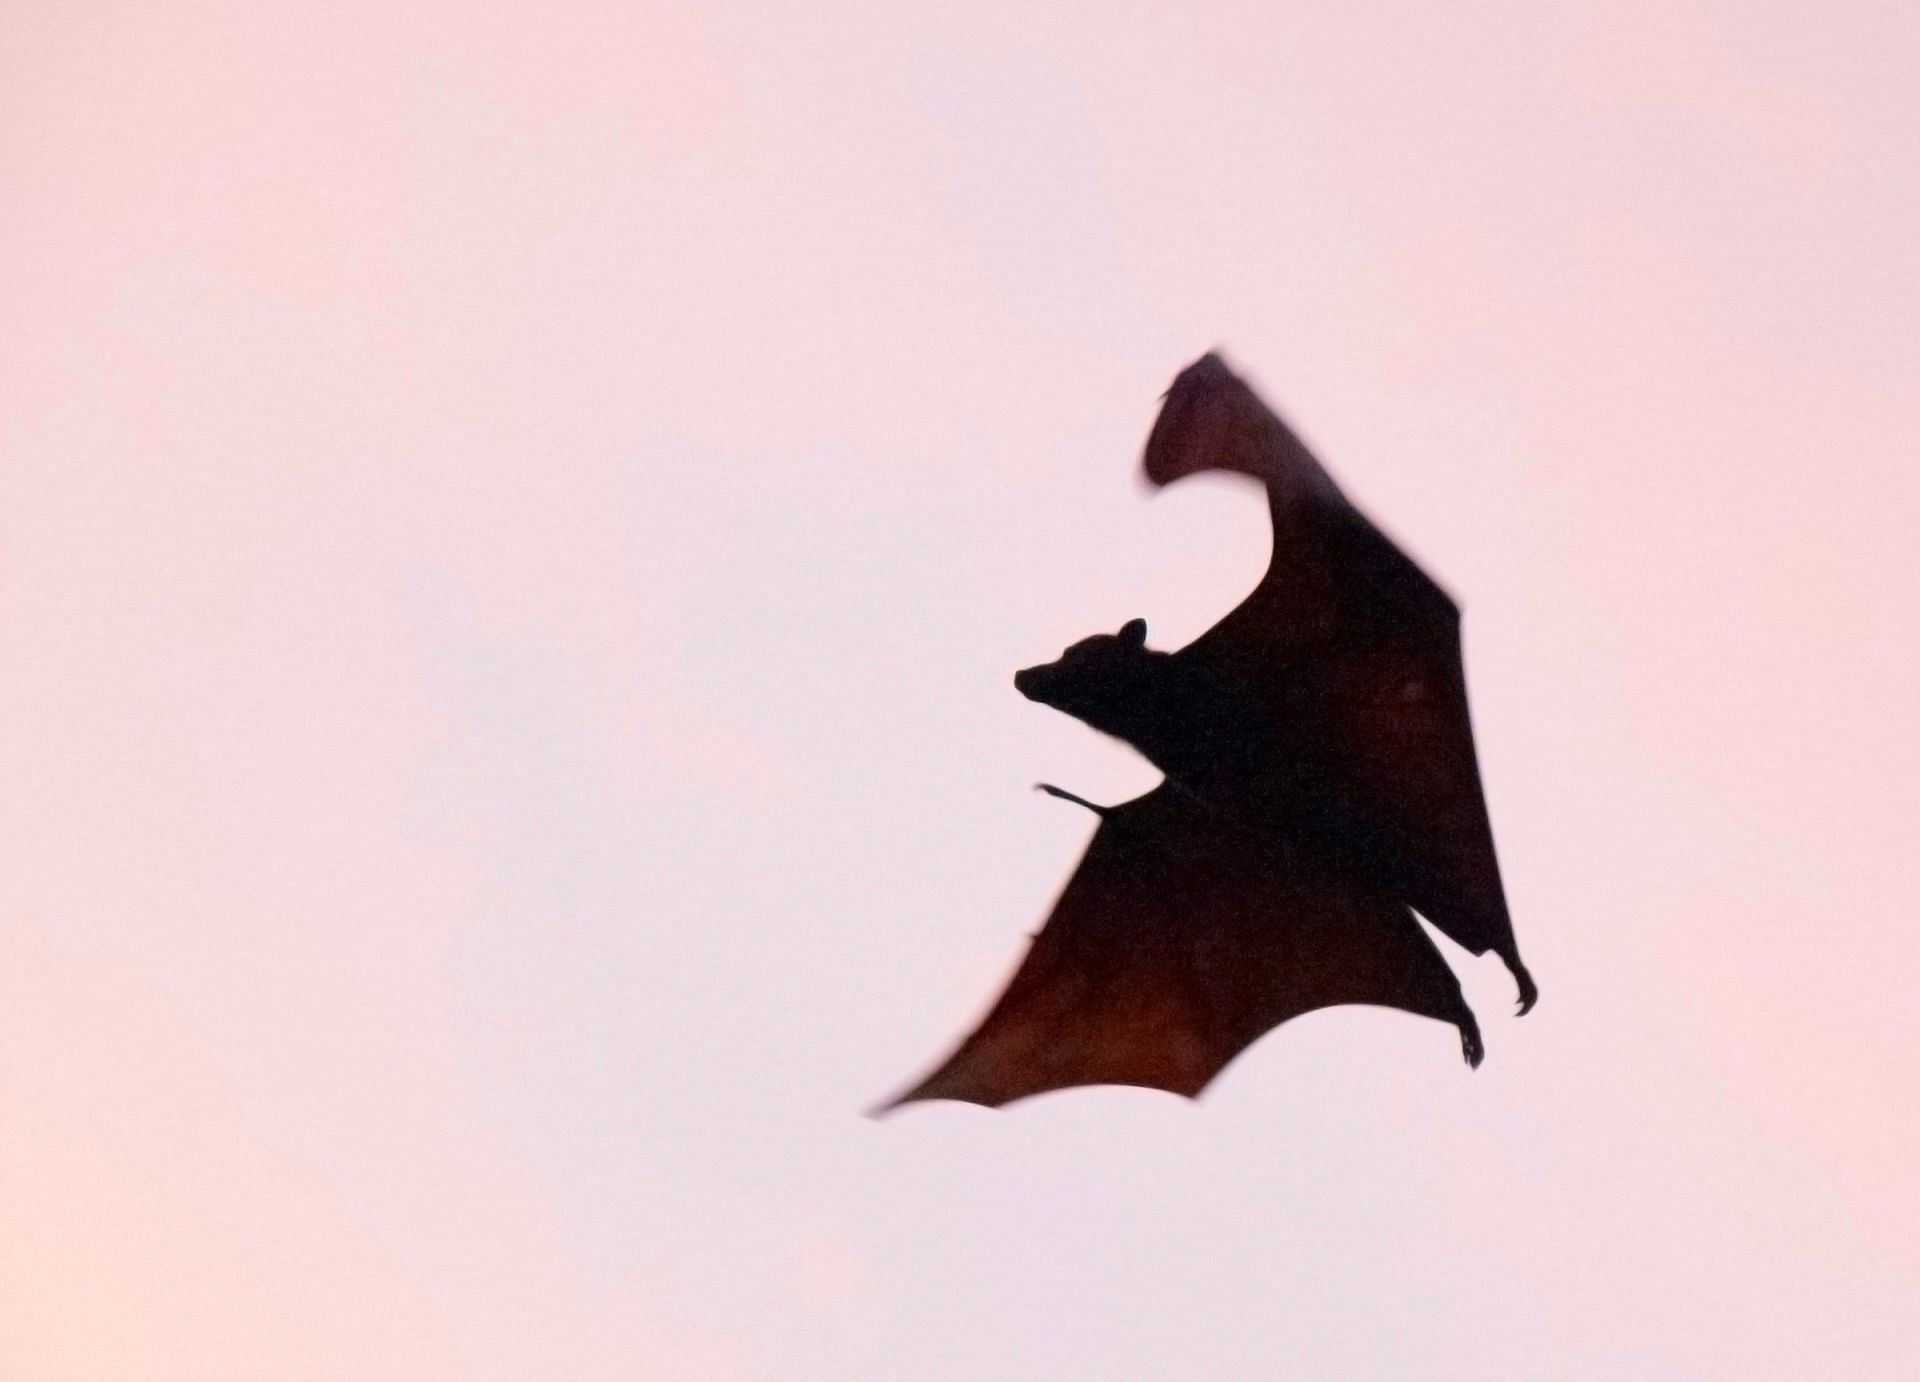 Bat bite a Human (Image via Unsplash/Igam Ogam)